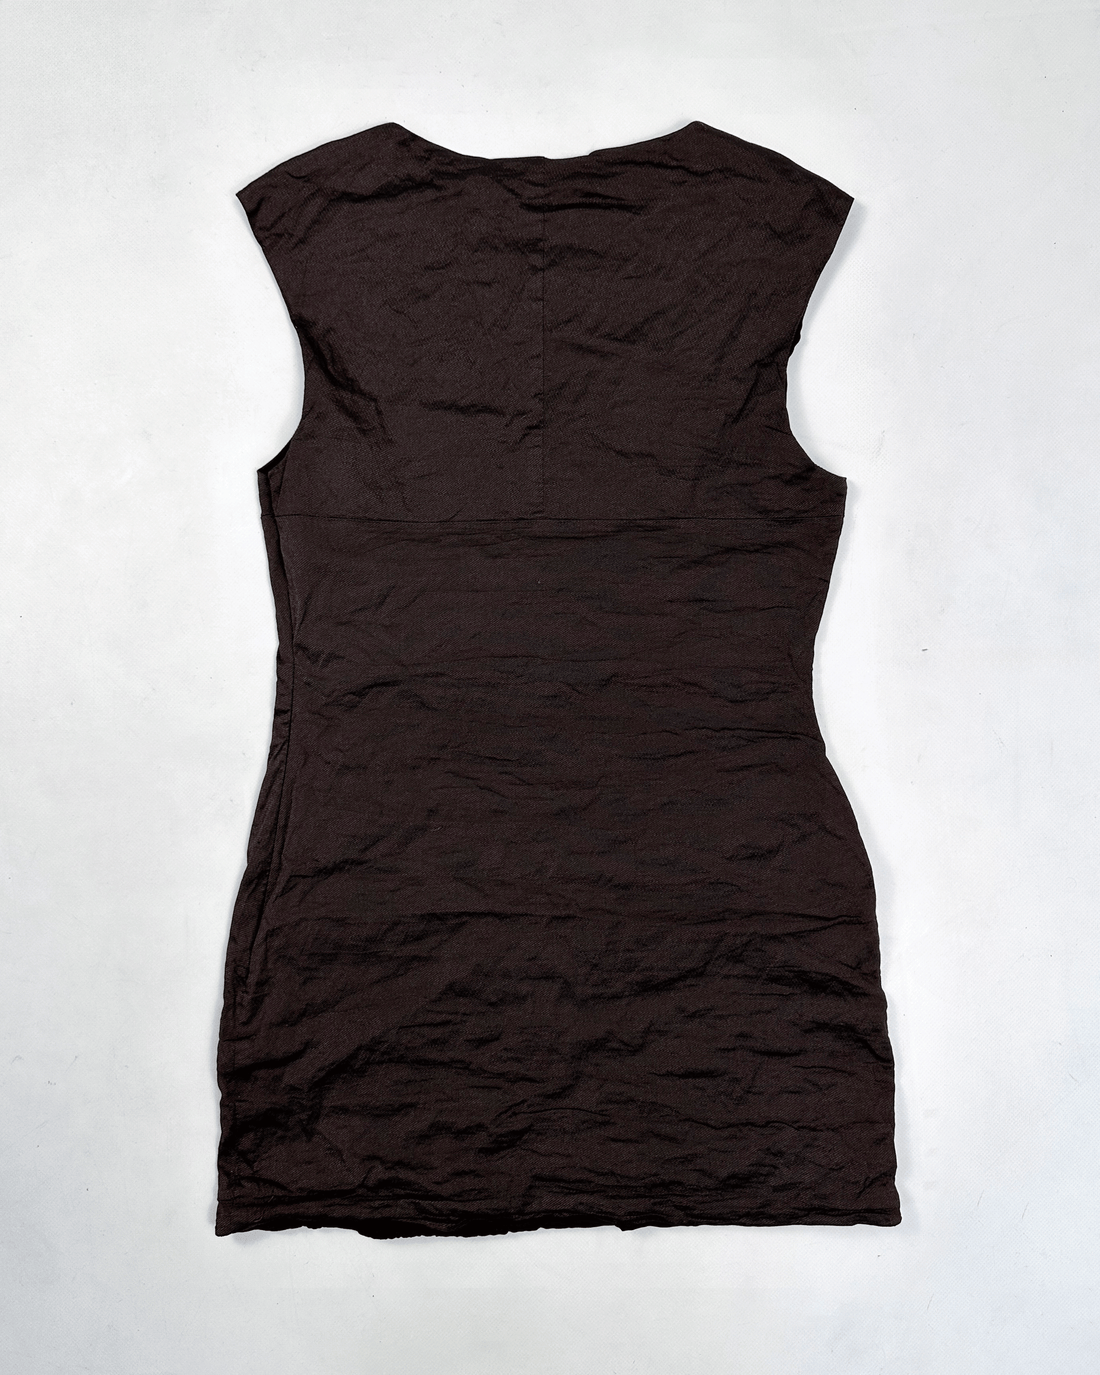 Sarah Paccini Metal Brown Dress 2000's